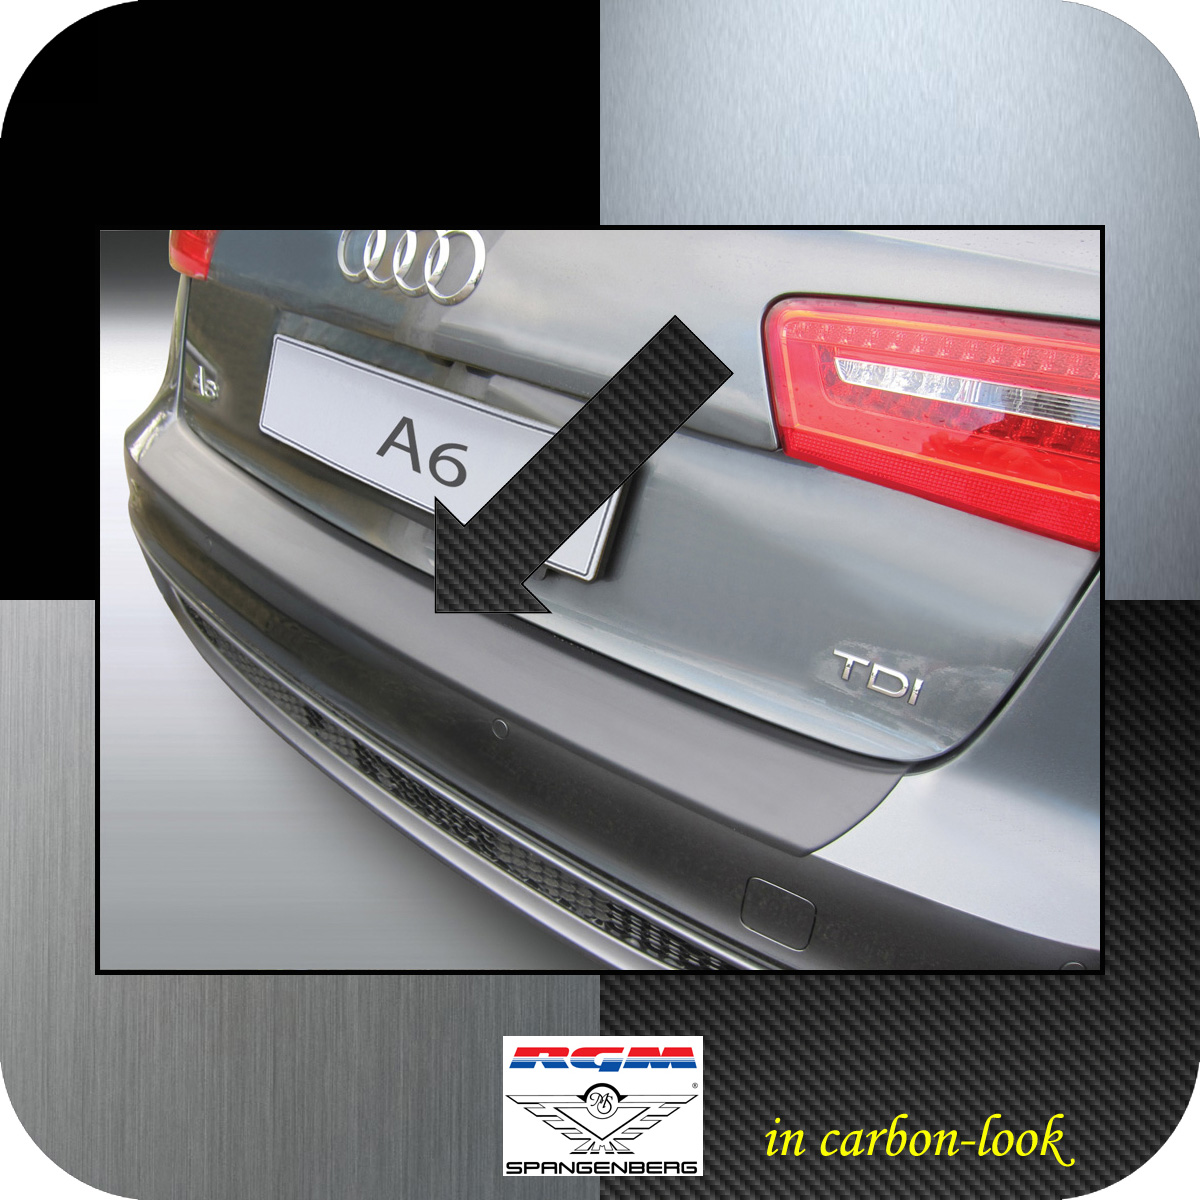 Ladekantenschutz Carbon-Look Audi A6 C7 Avant Kombi vor Mopf 2011-2014 3509713